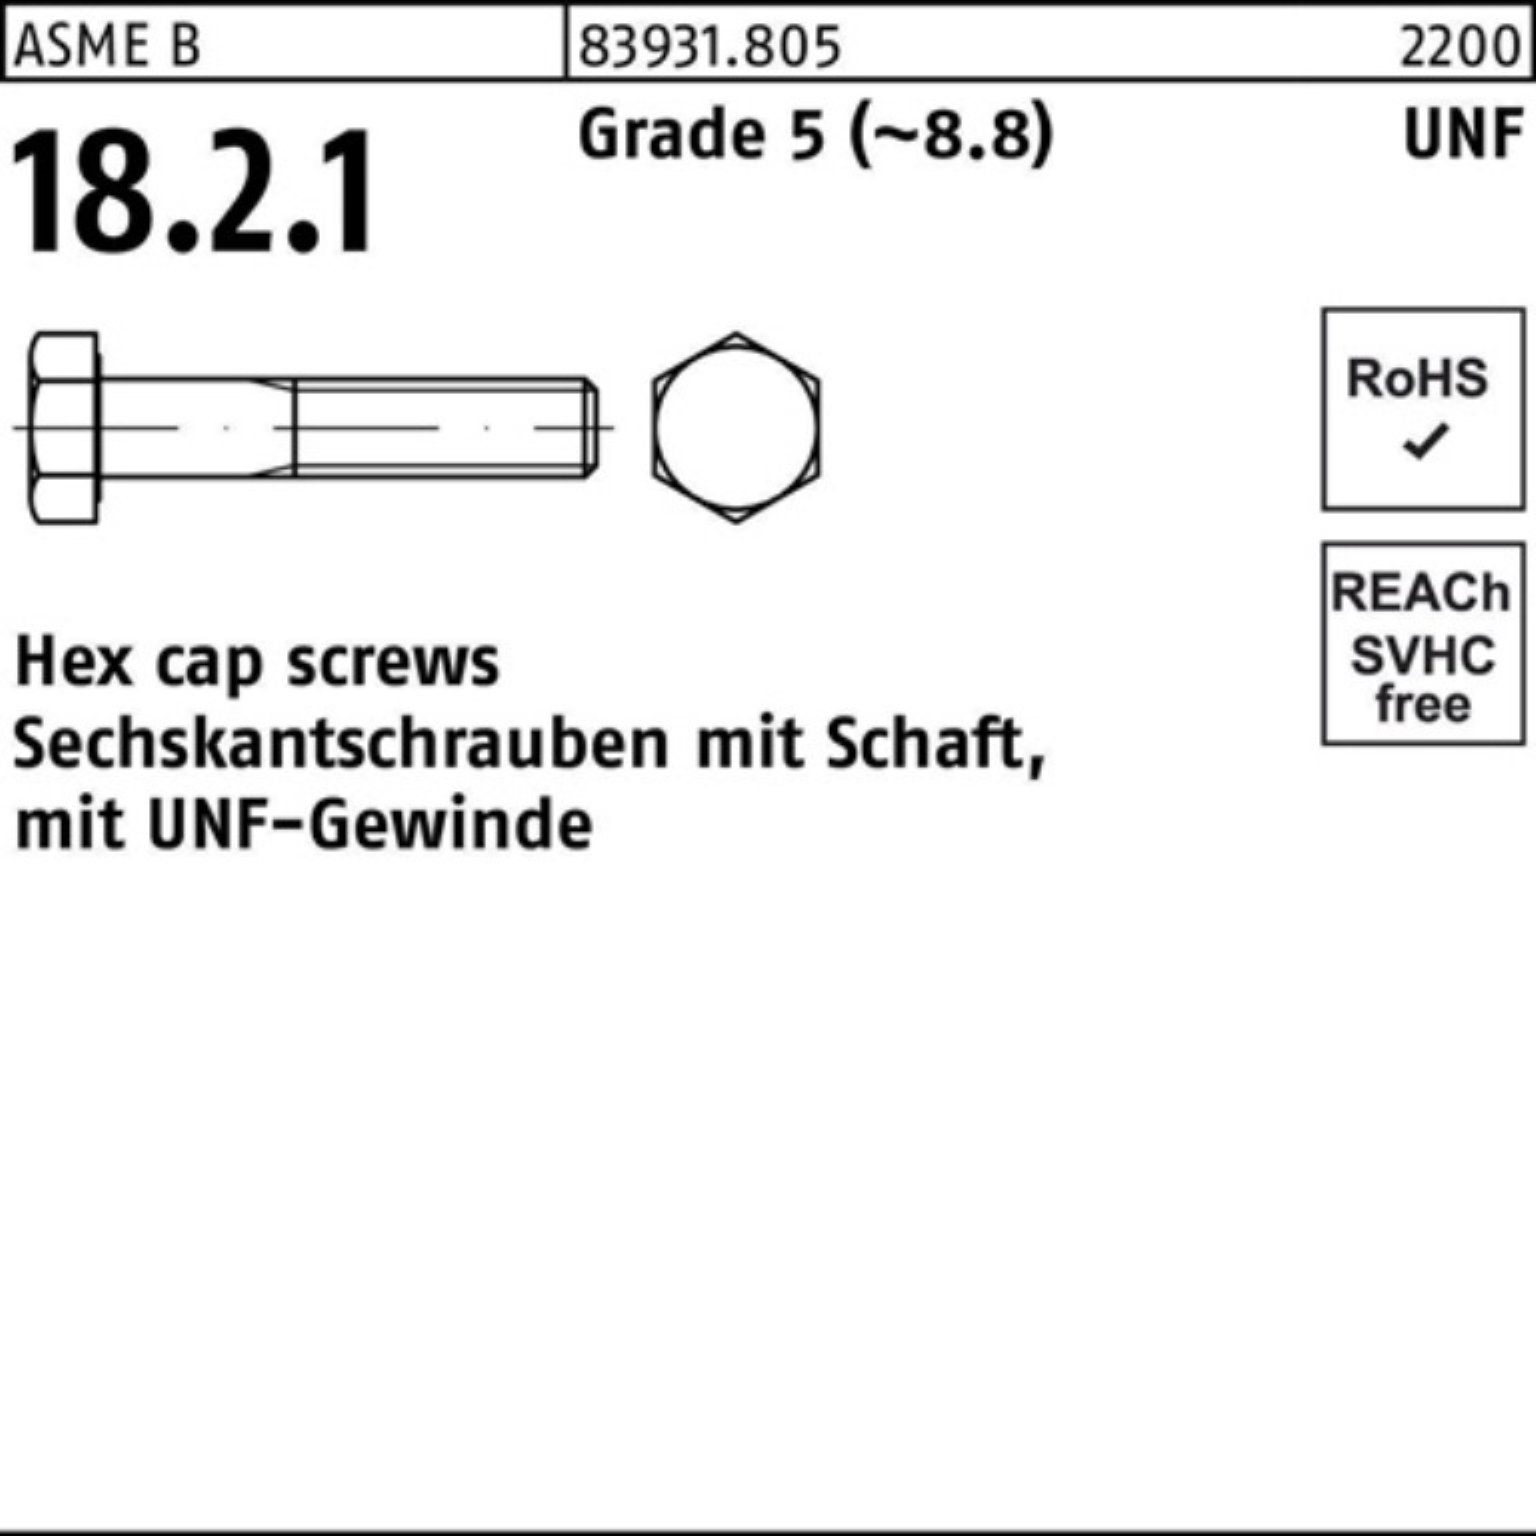 Sechskantschraube Sechskantschraube 100er UNF-Gewinde/Schaft Gra Reyher R 5/16x2 Pack 1/2 83931